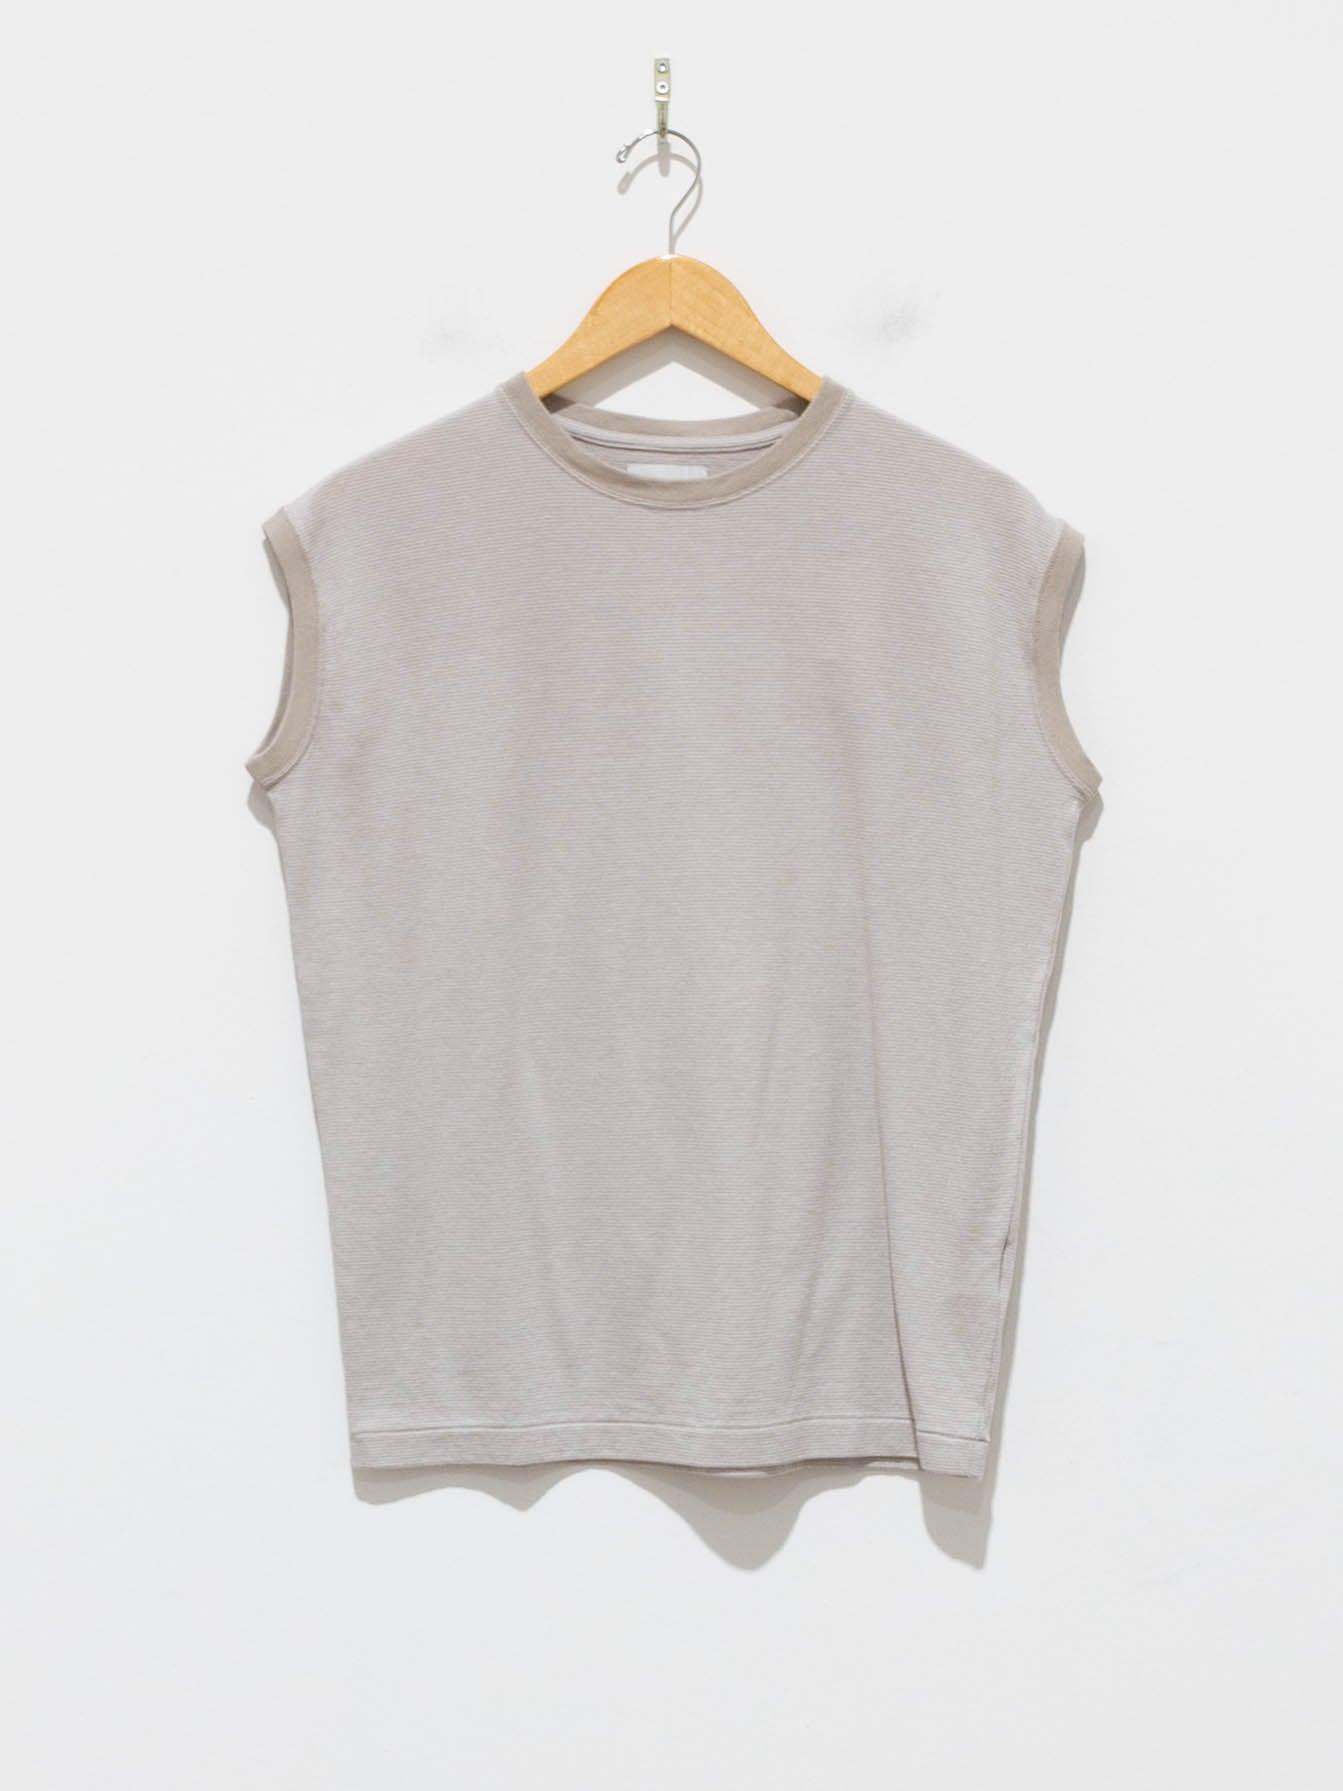 Namu Shop - Phlannel Cotton Linen Links Border Sleeveless T-Shirt - Beige